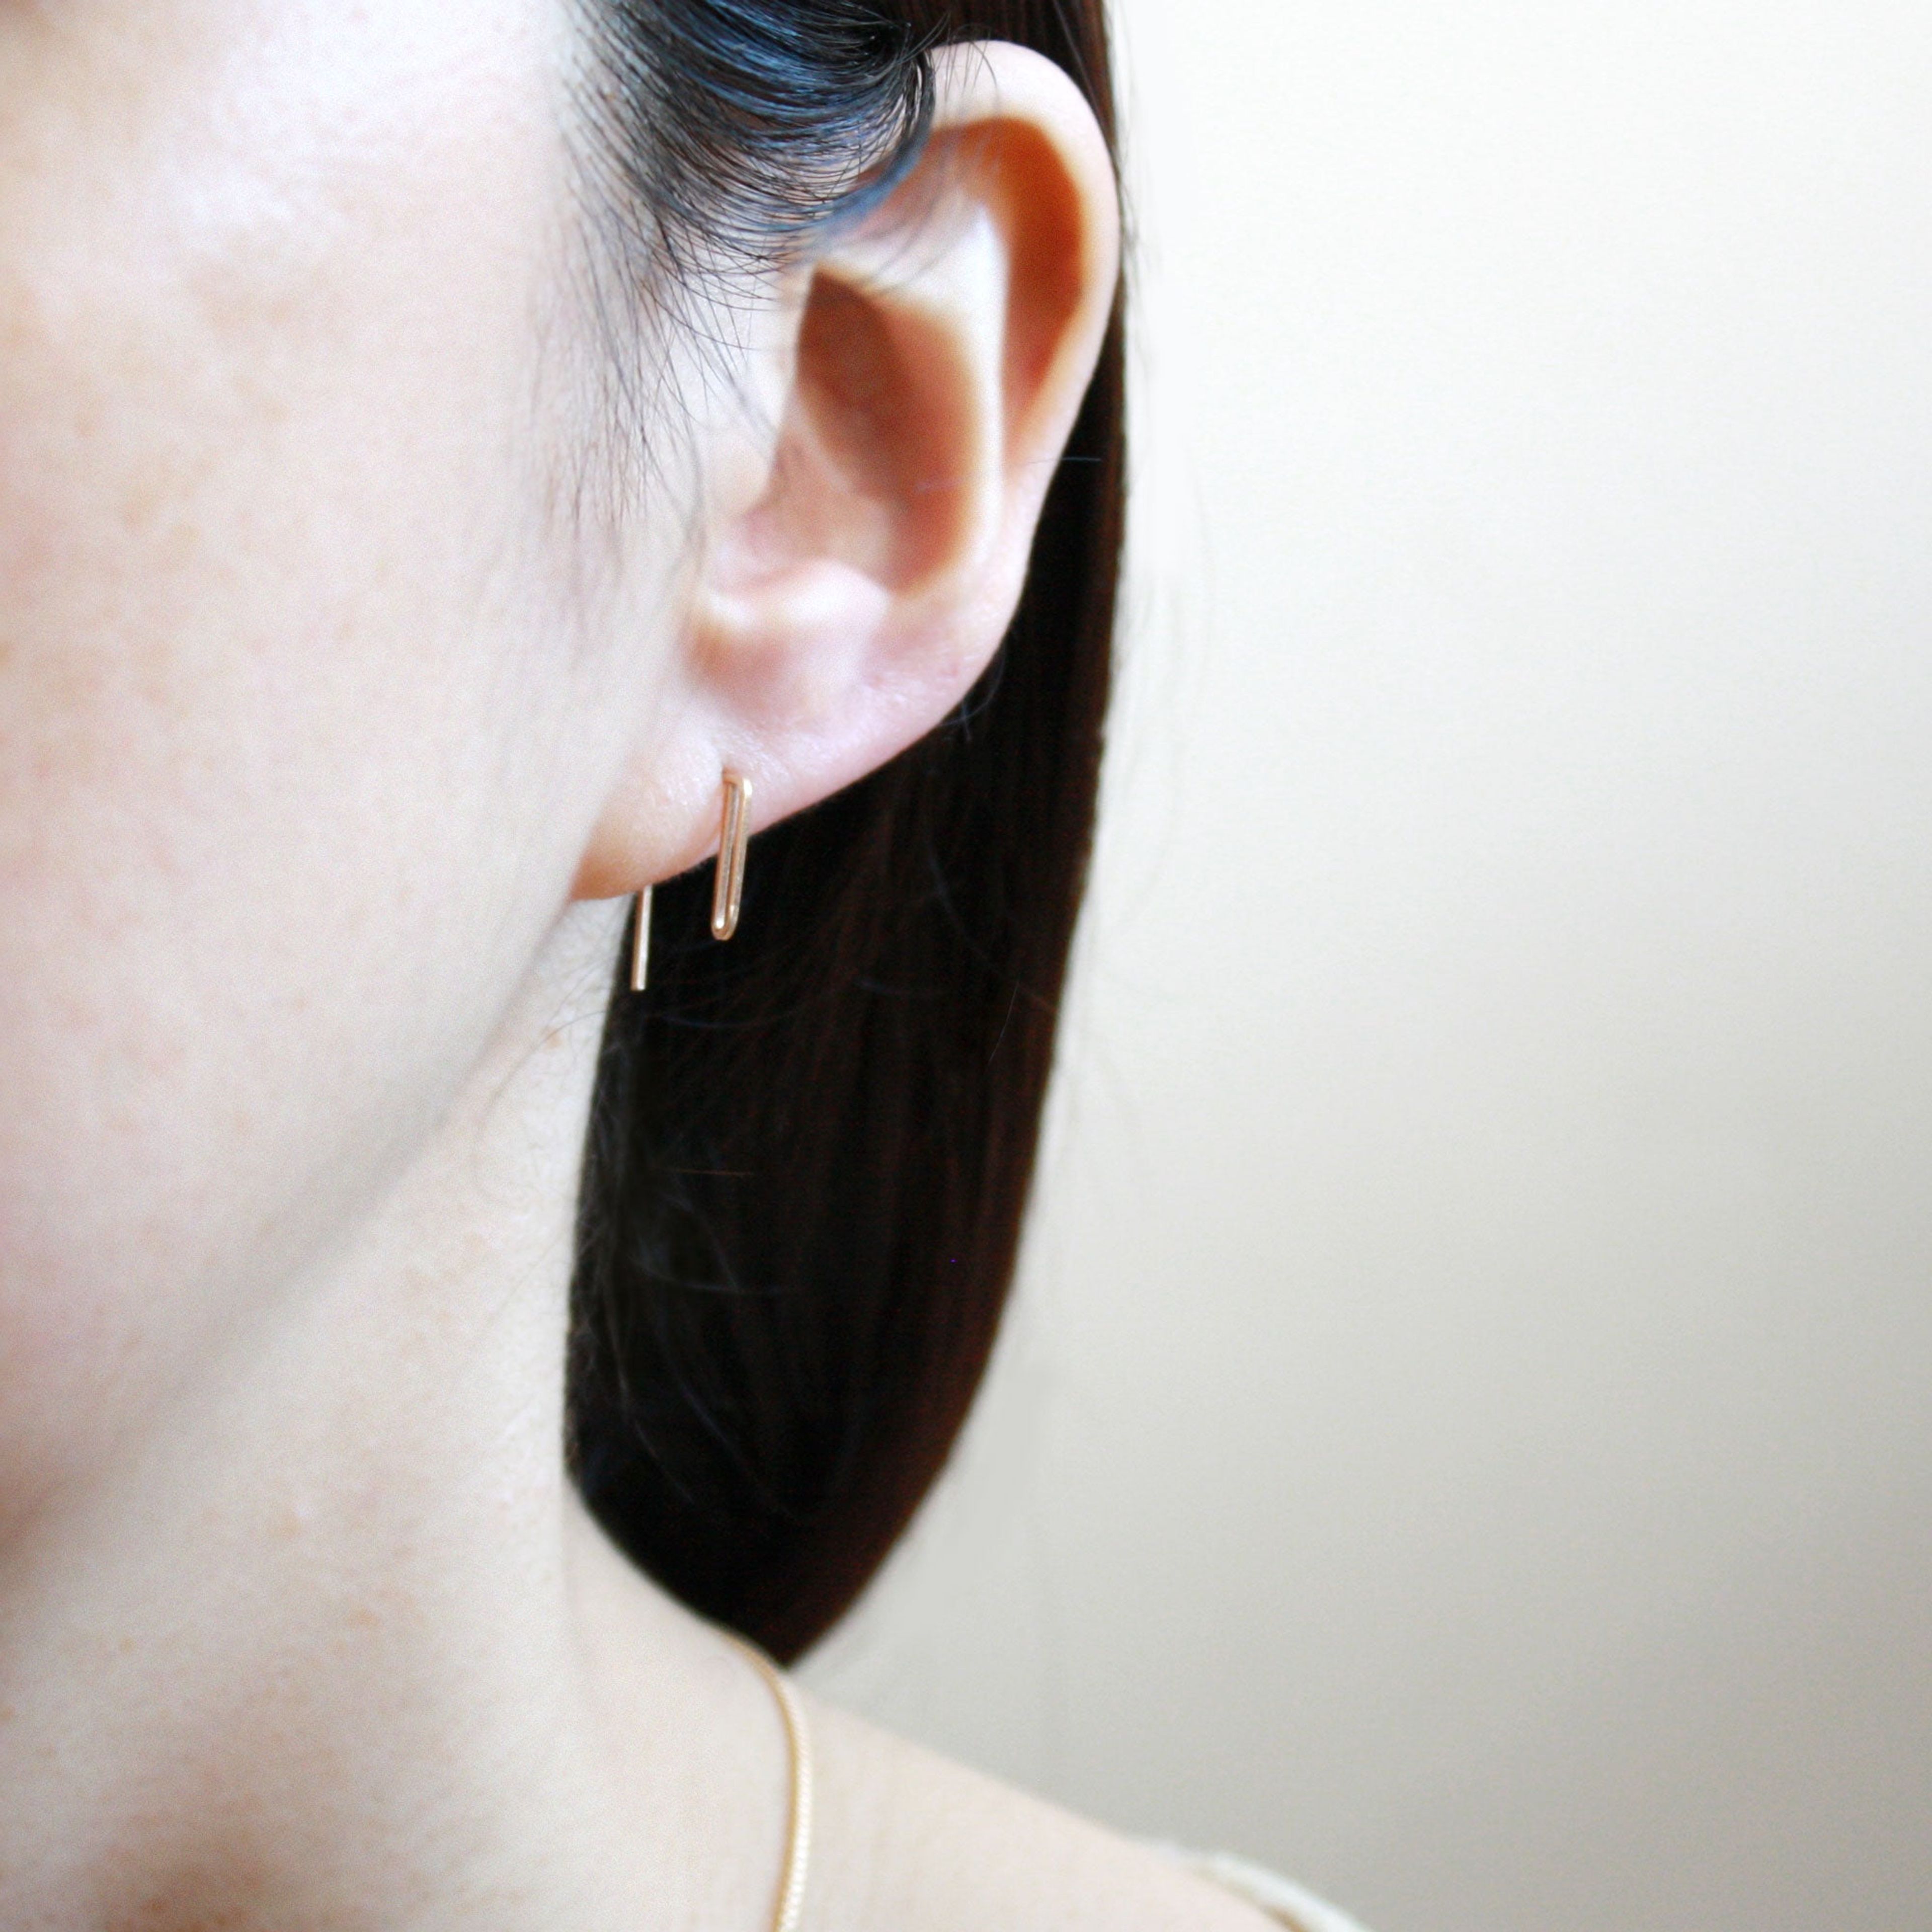 Double Bar Threader Earrings - Short